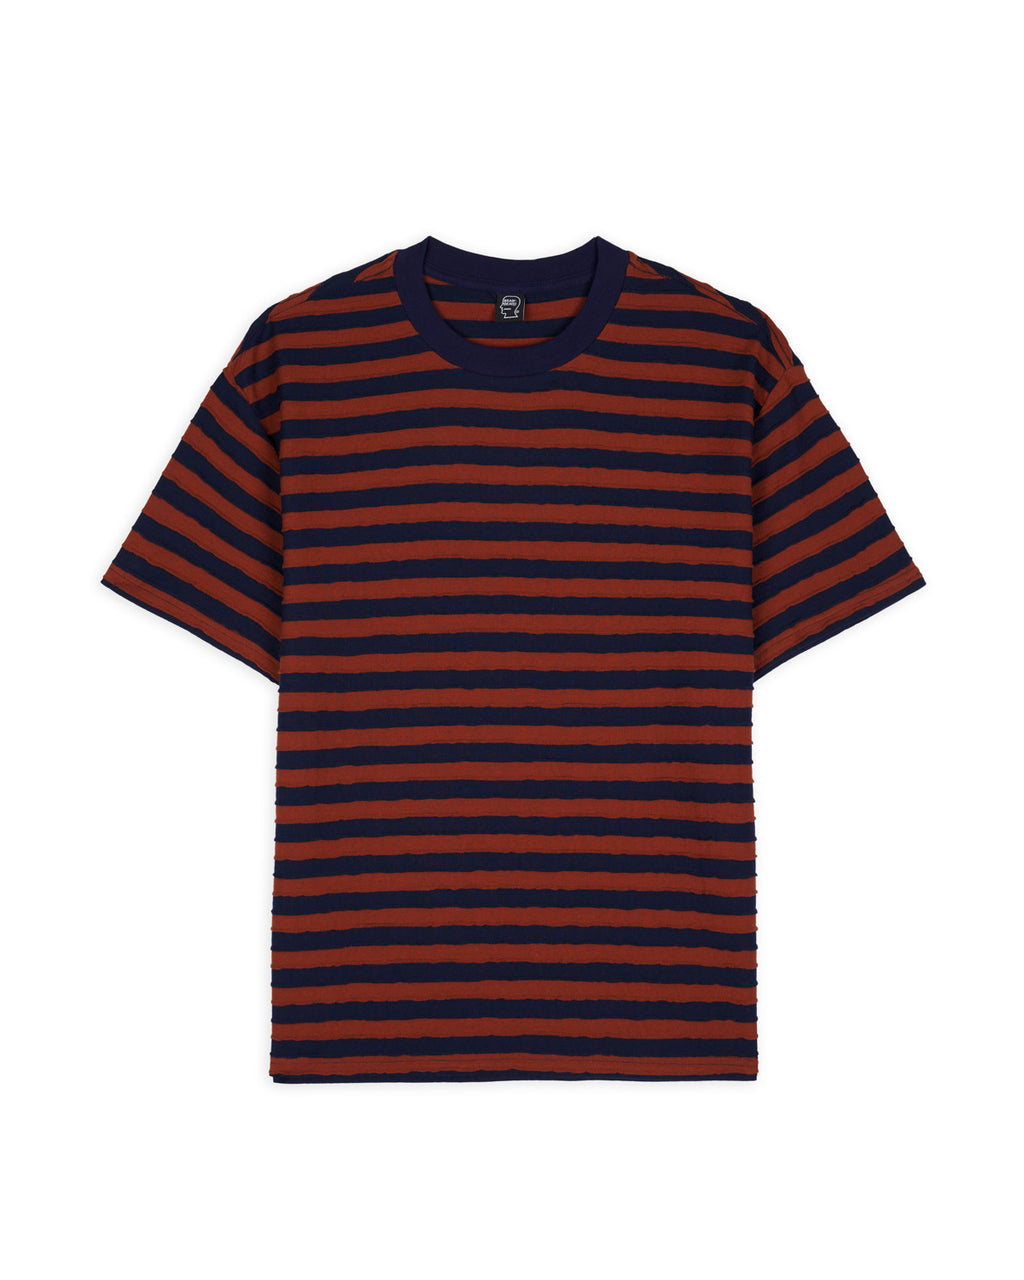 Denny Blaine Striped T-Shirt - Navy/Light Brown